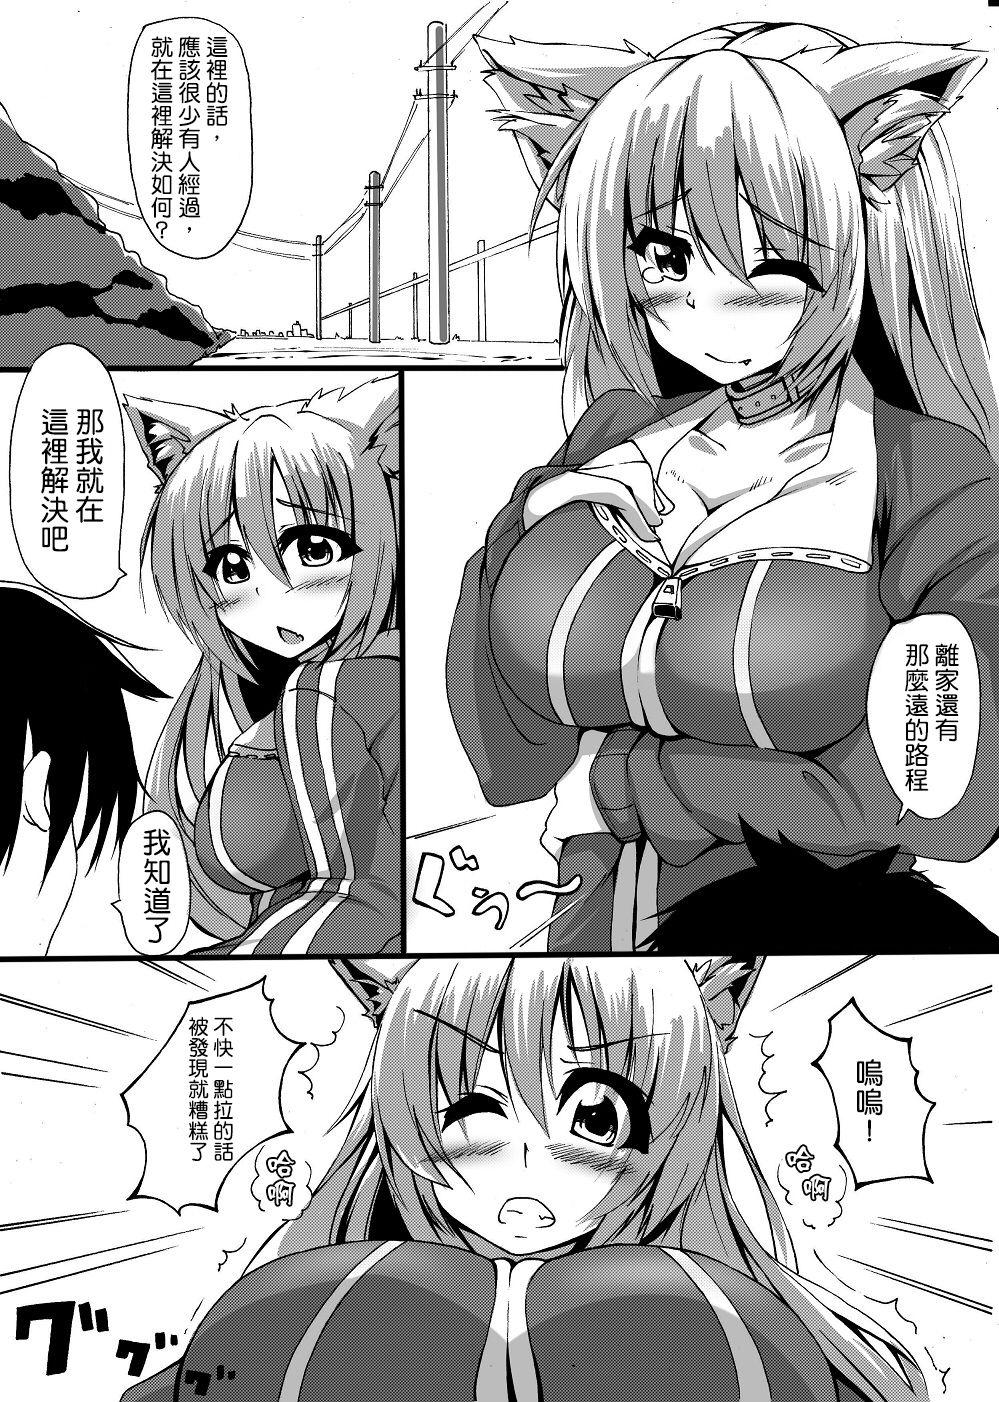 Scat Manga 2